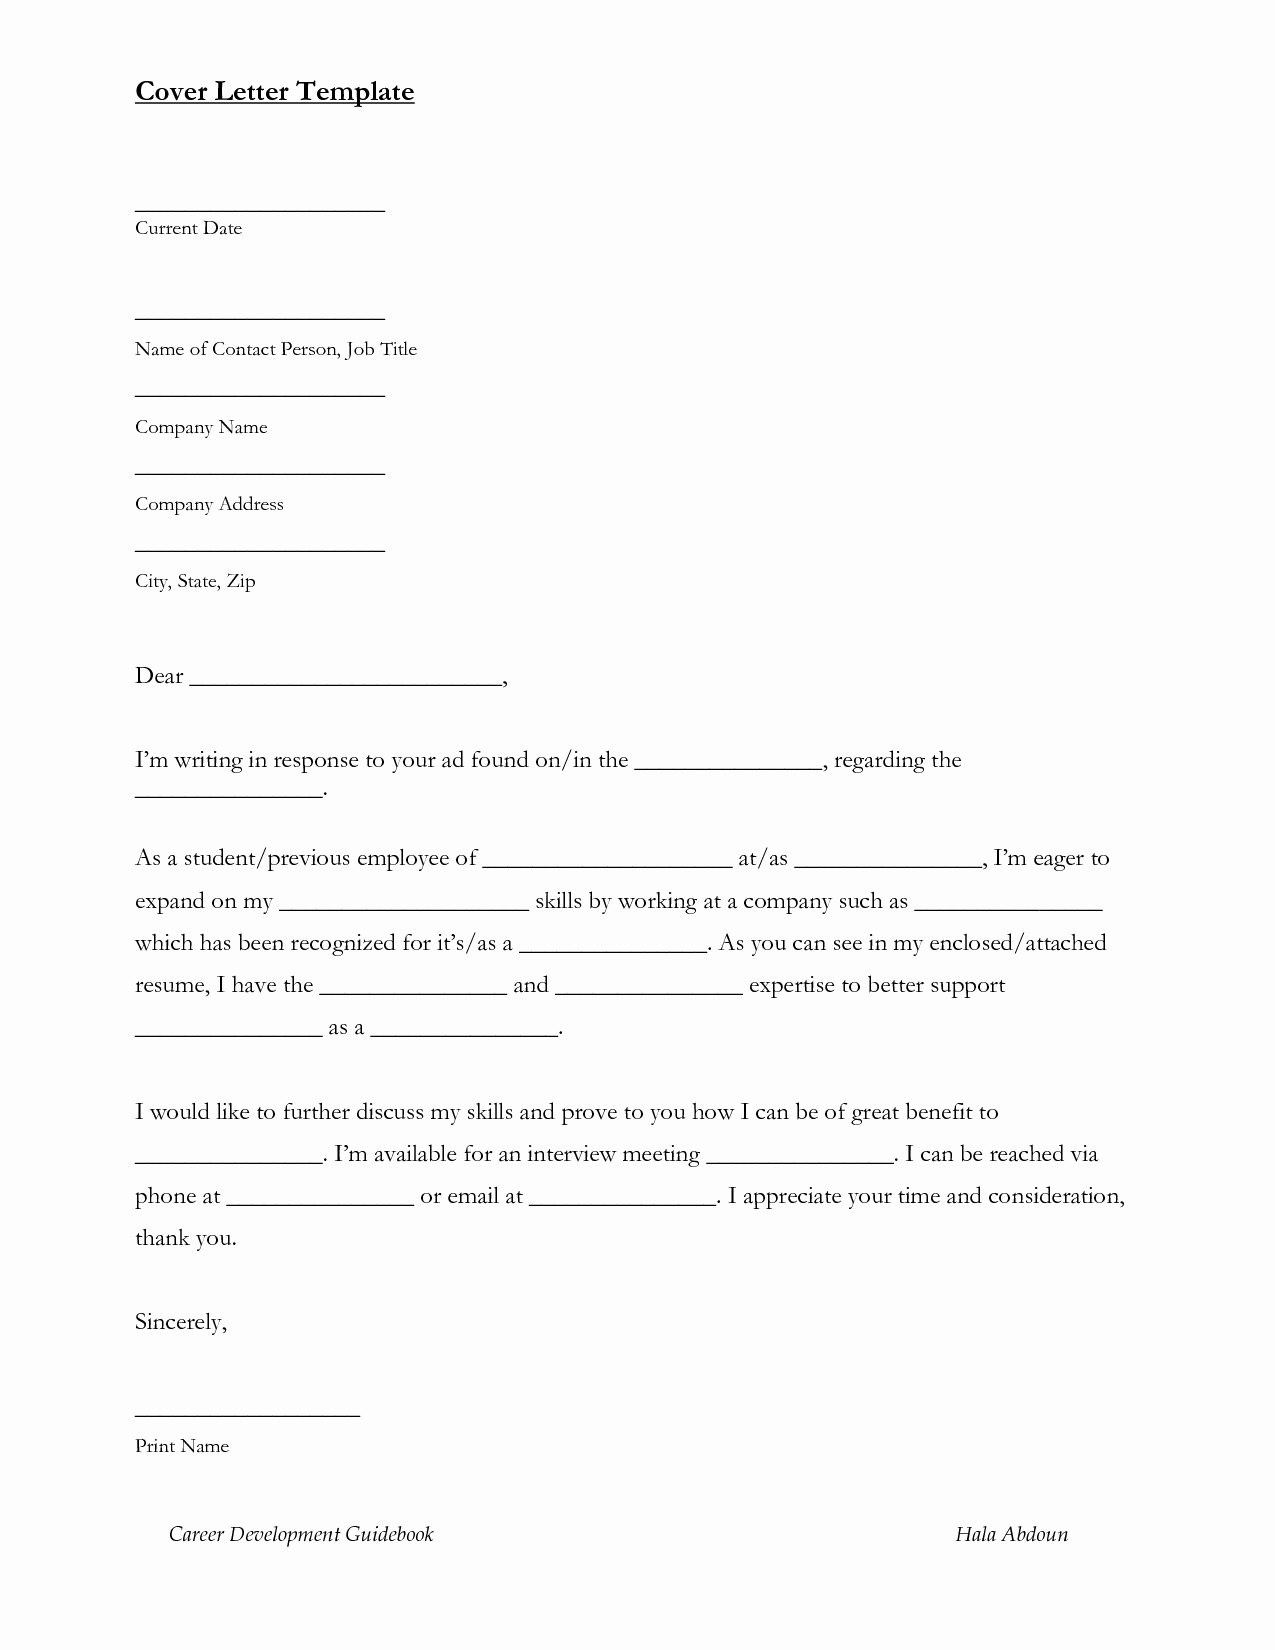 Resume Cover Letter Free Templates Samplebusinessresume